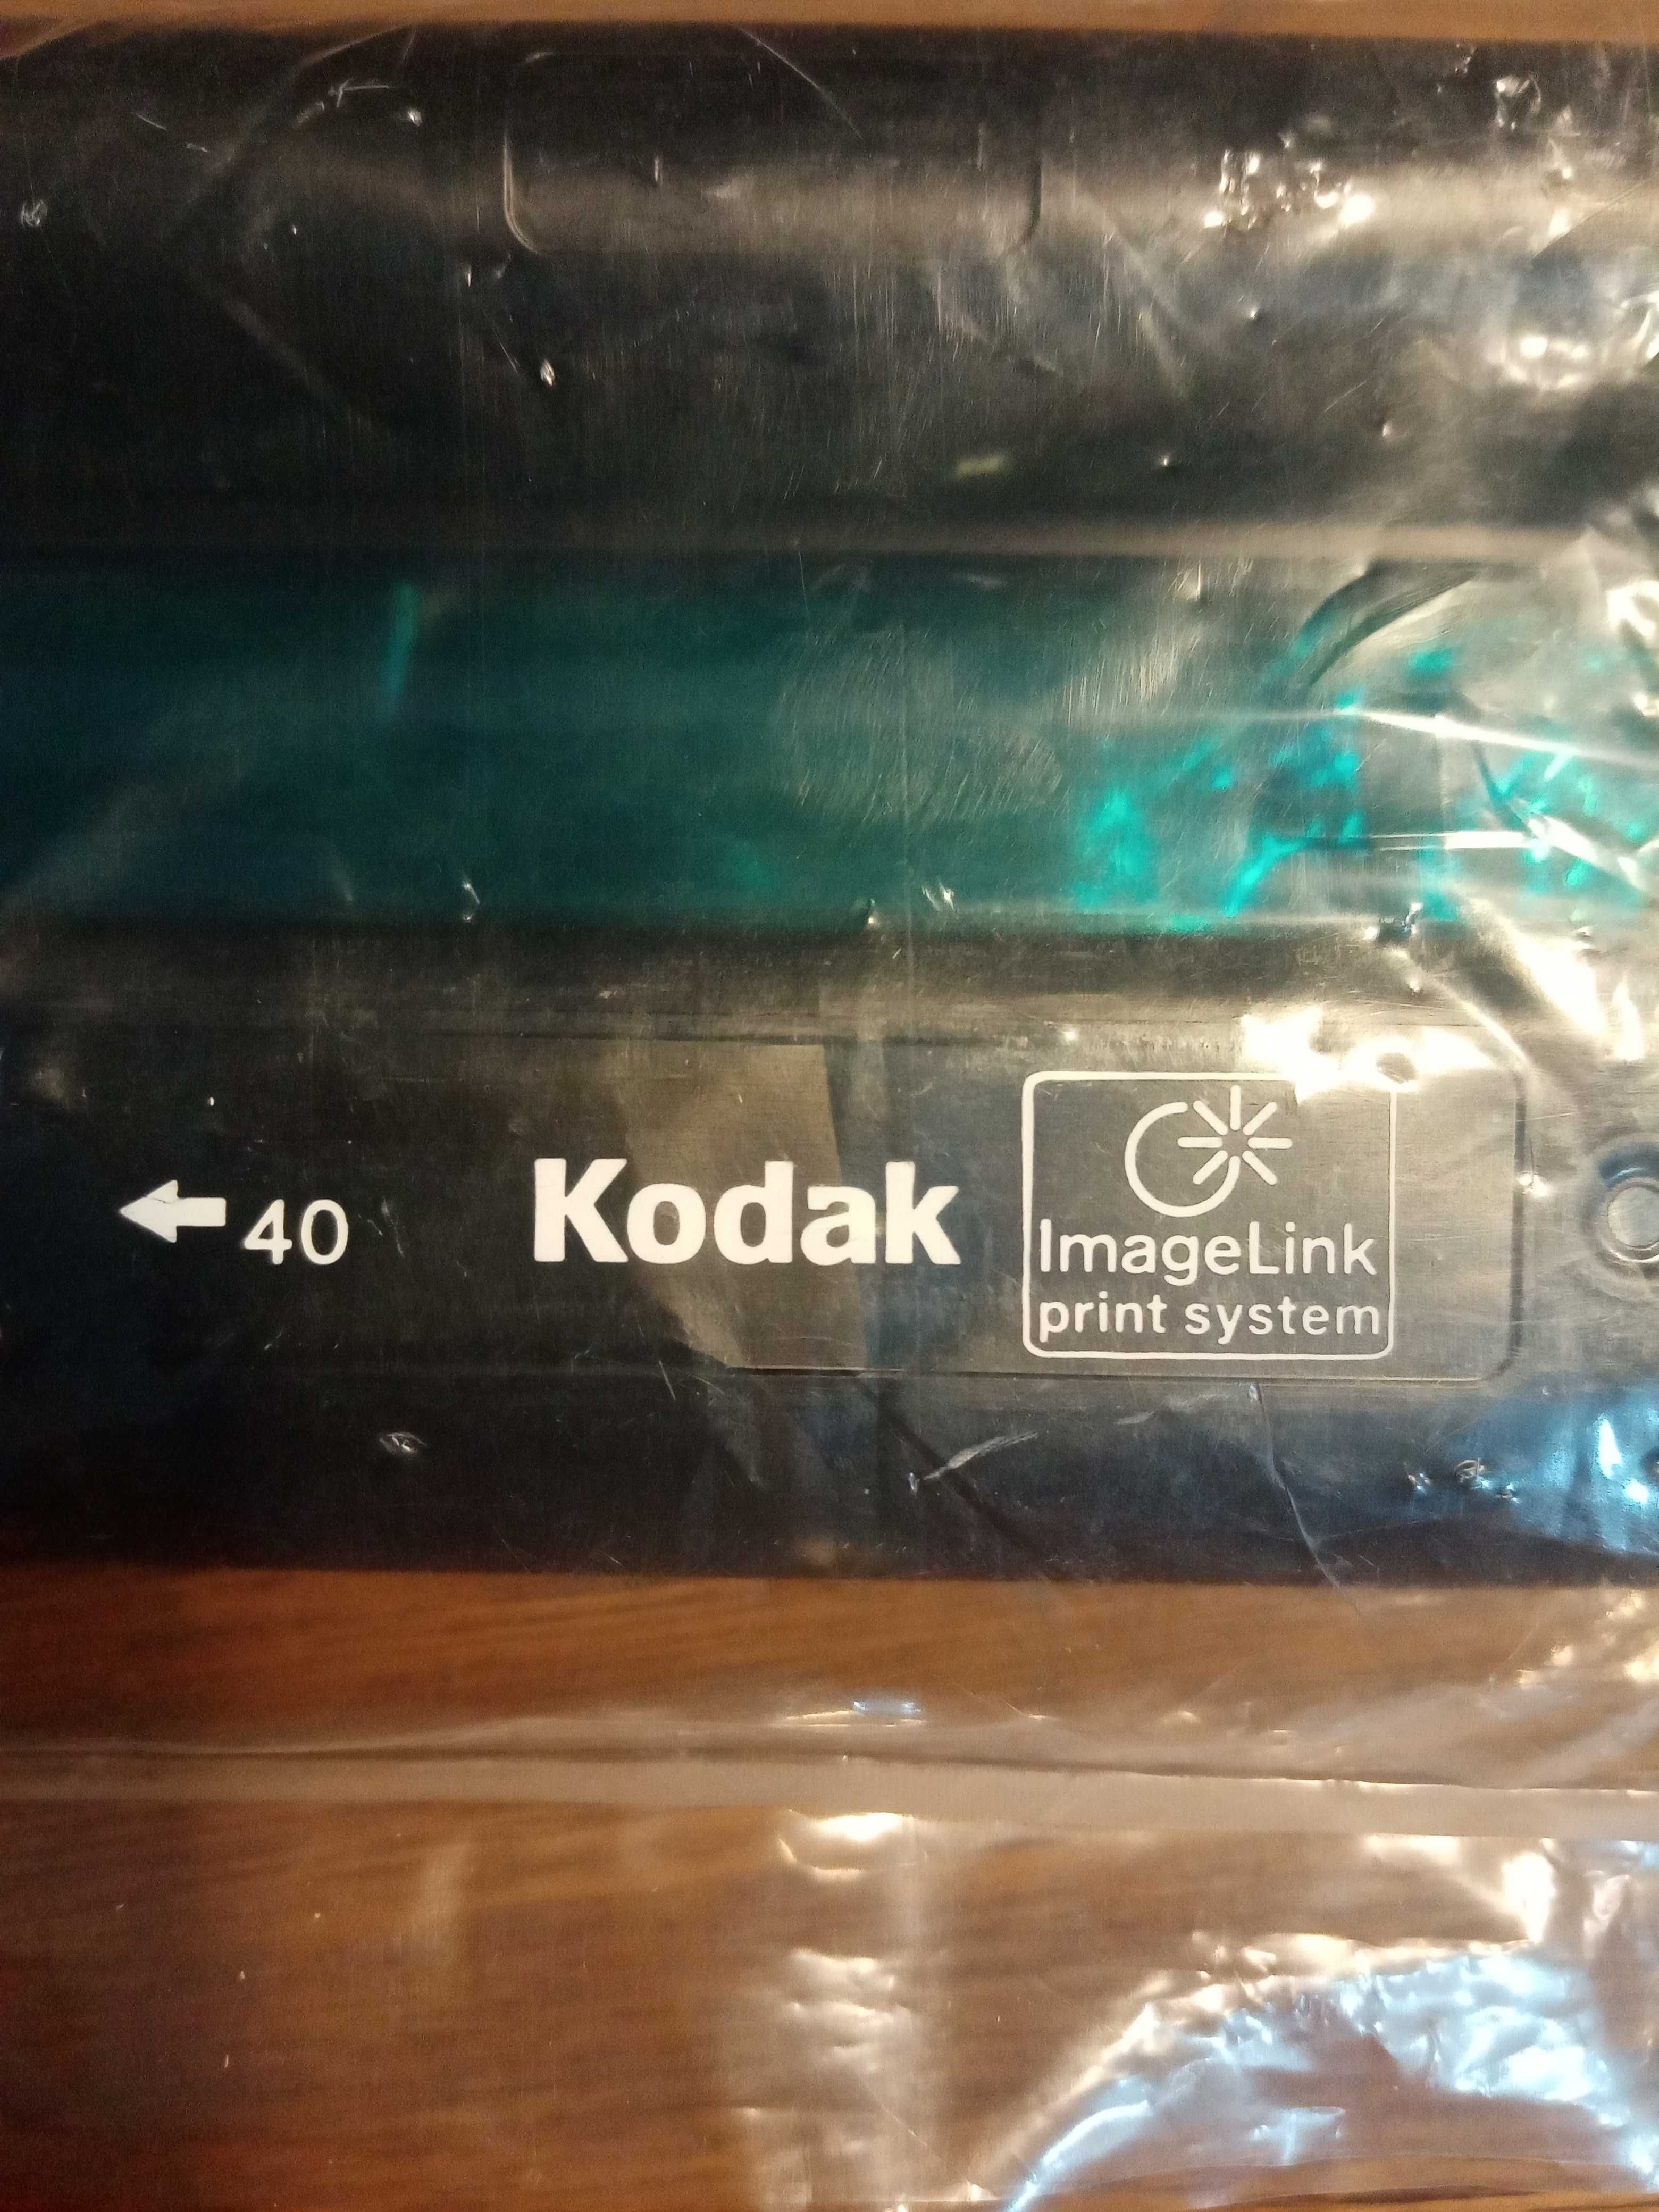 Kodak Imagelink print system 40